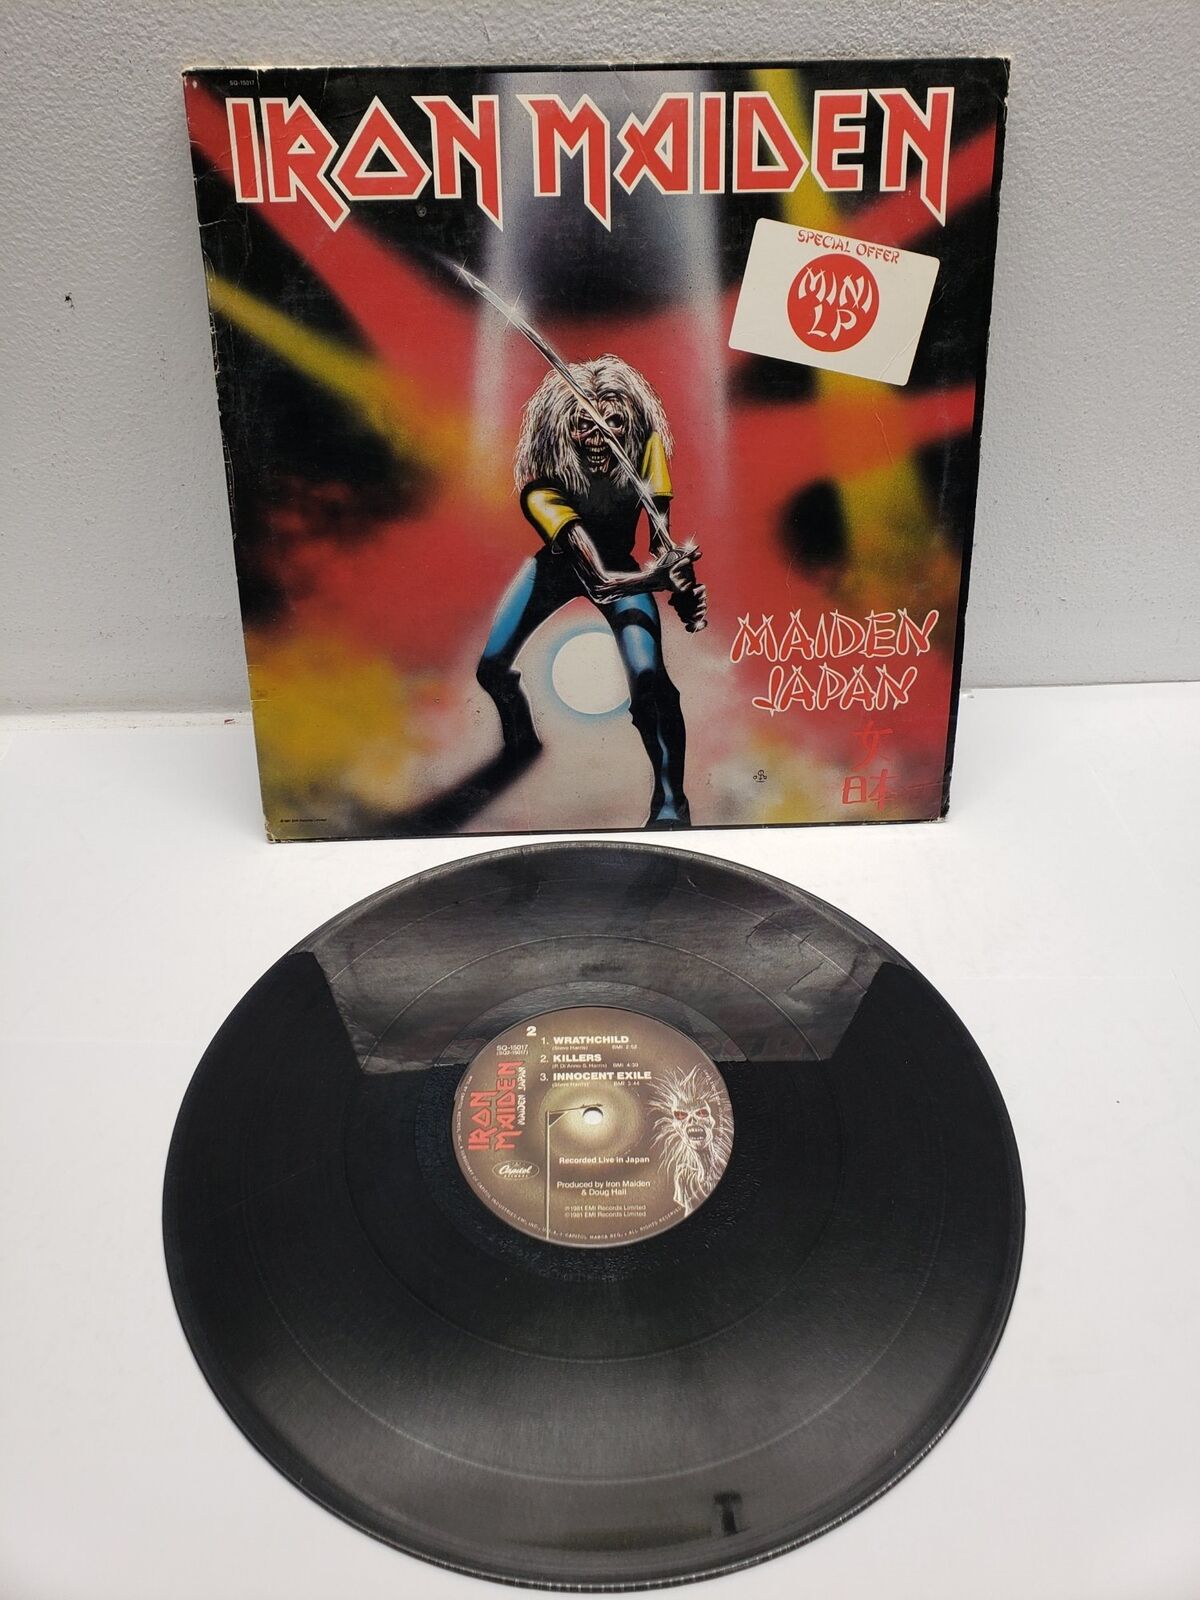 IRON MAIDEN “Made In Japan" Mini LP Vinyl Record